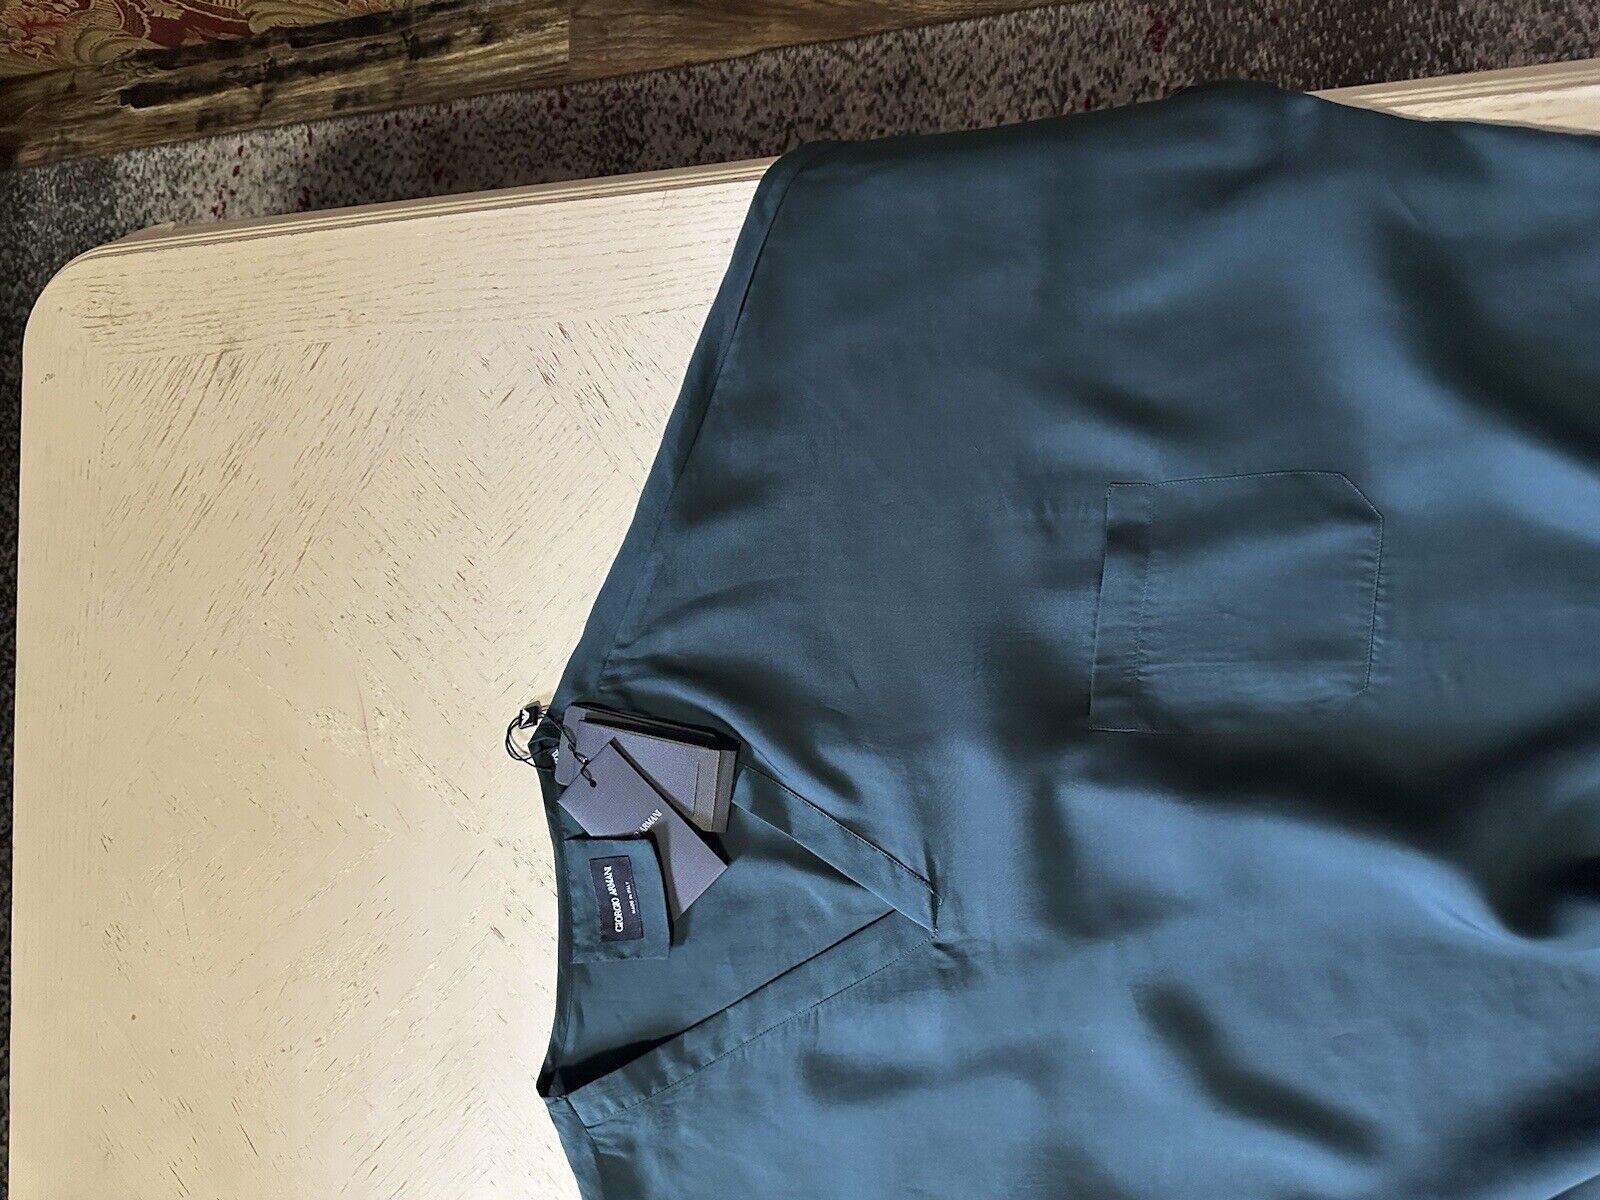 NWT $895 Giorgio Armani Mens Loose Fit T Shirt Green Size XXXL Italy